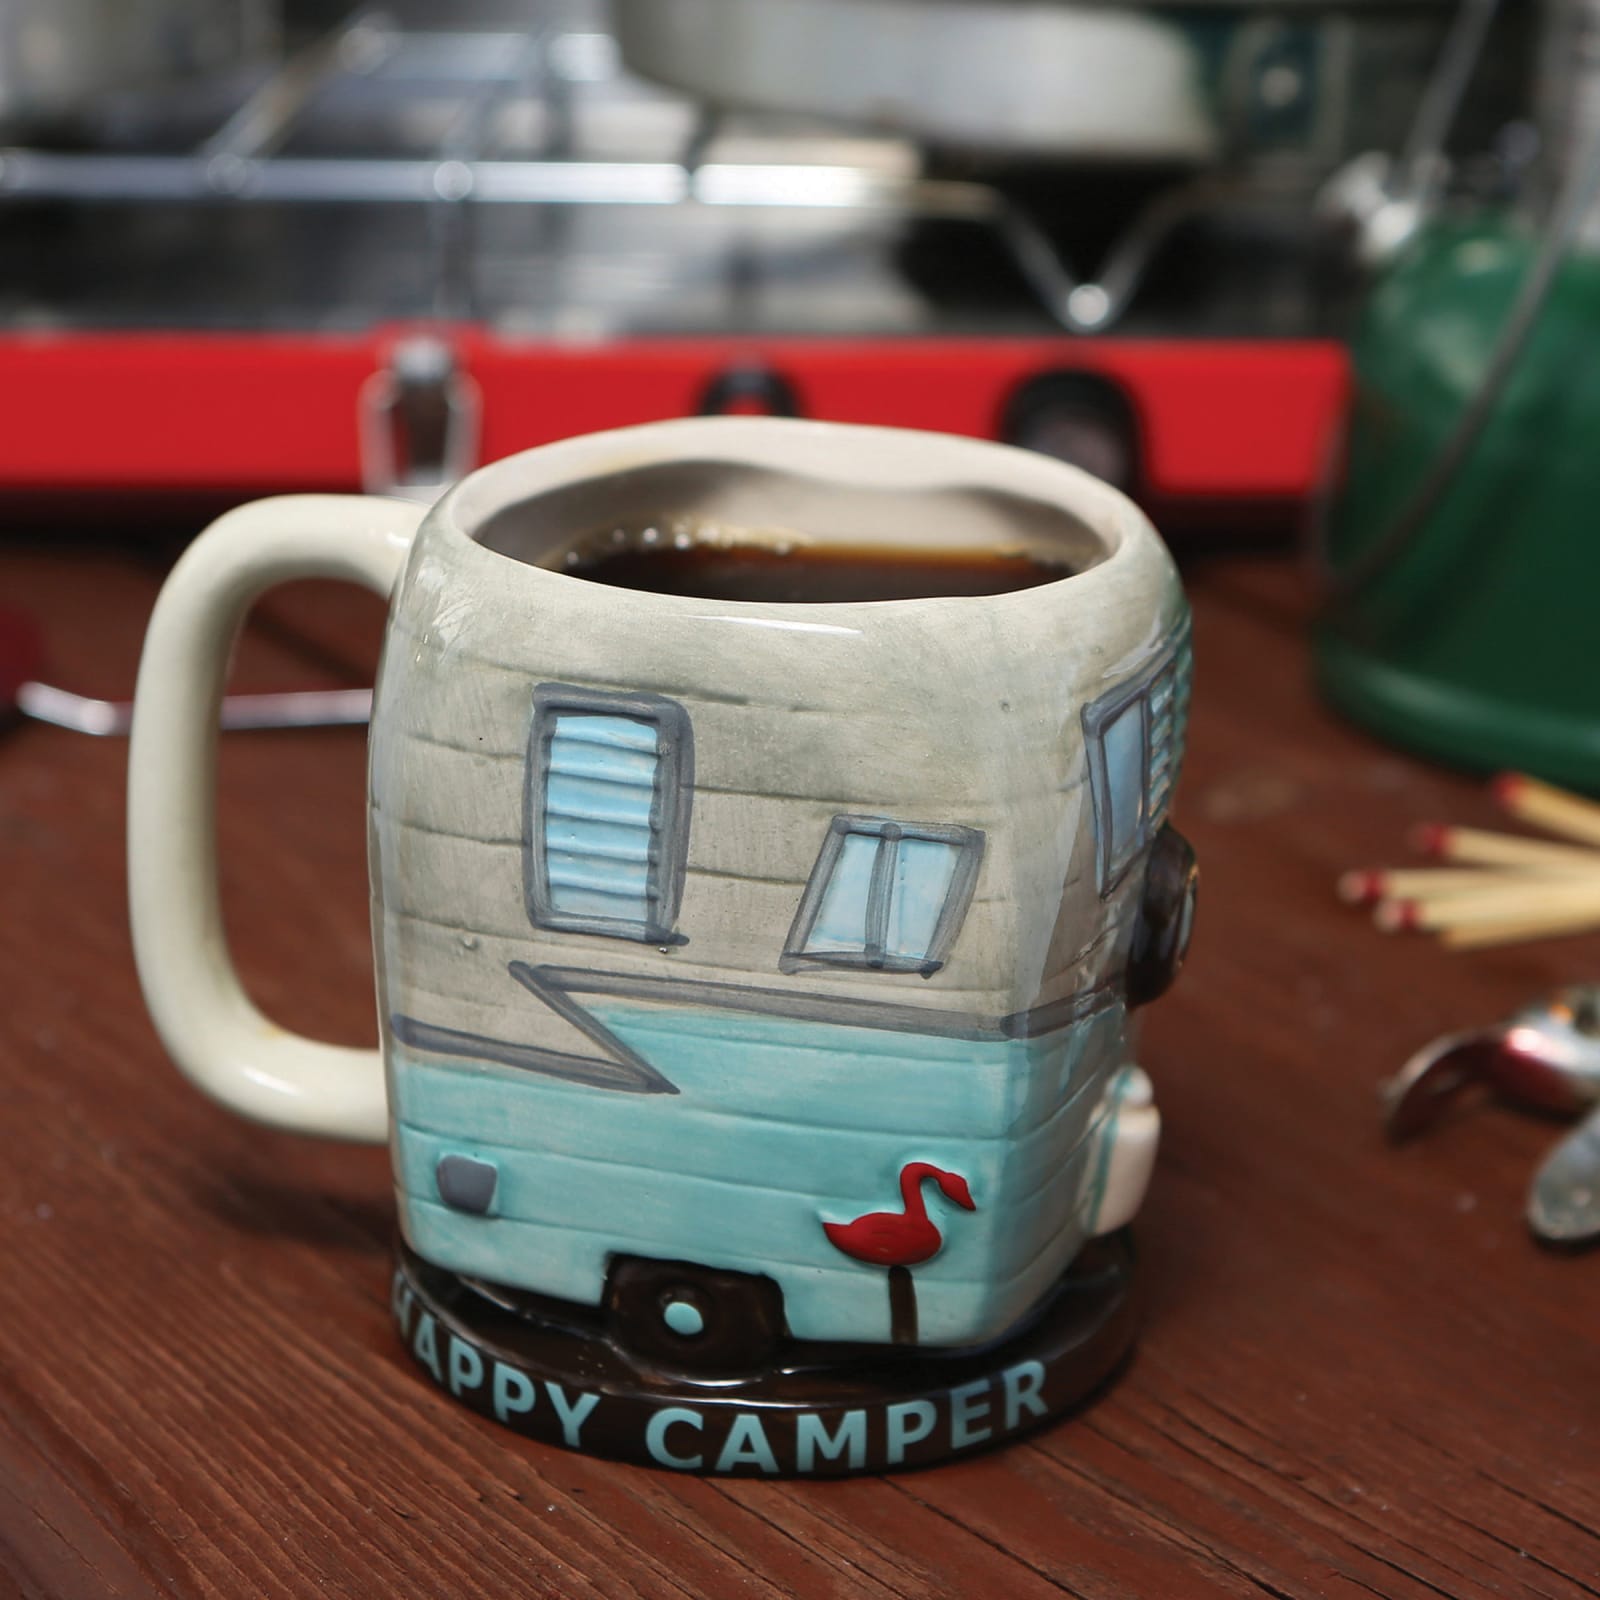 The Happy Camper Coffee Mug